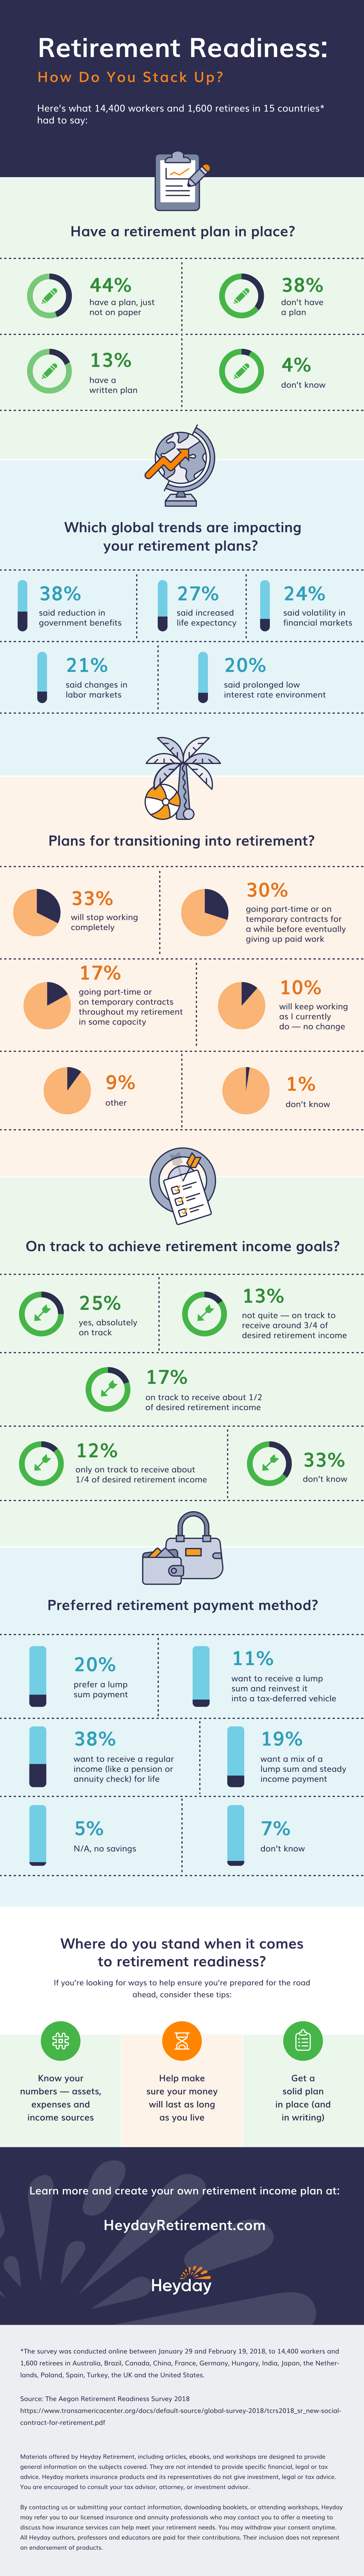 Heyday Retirement Readiness Infographic_